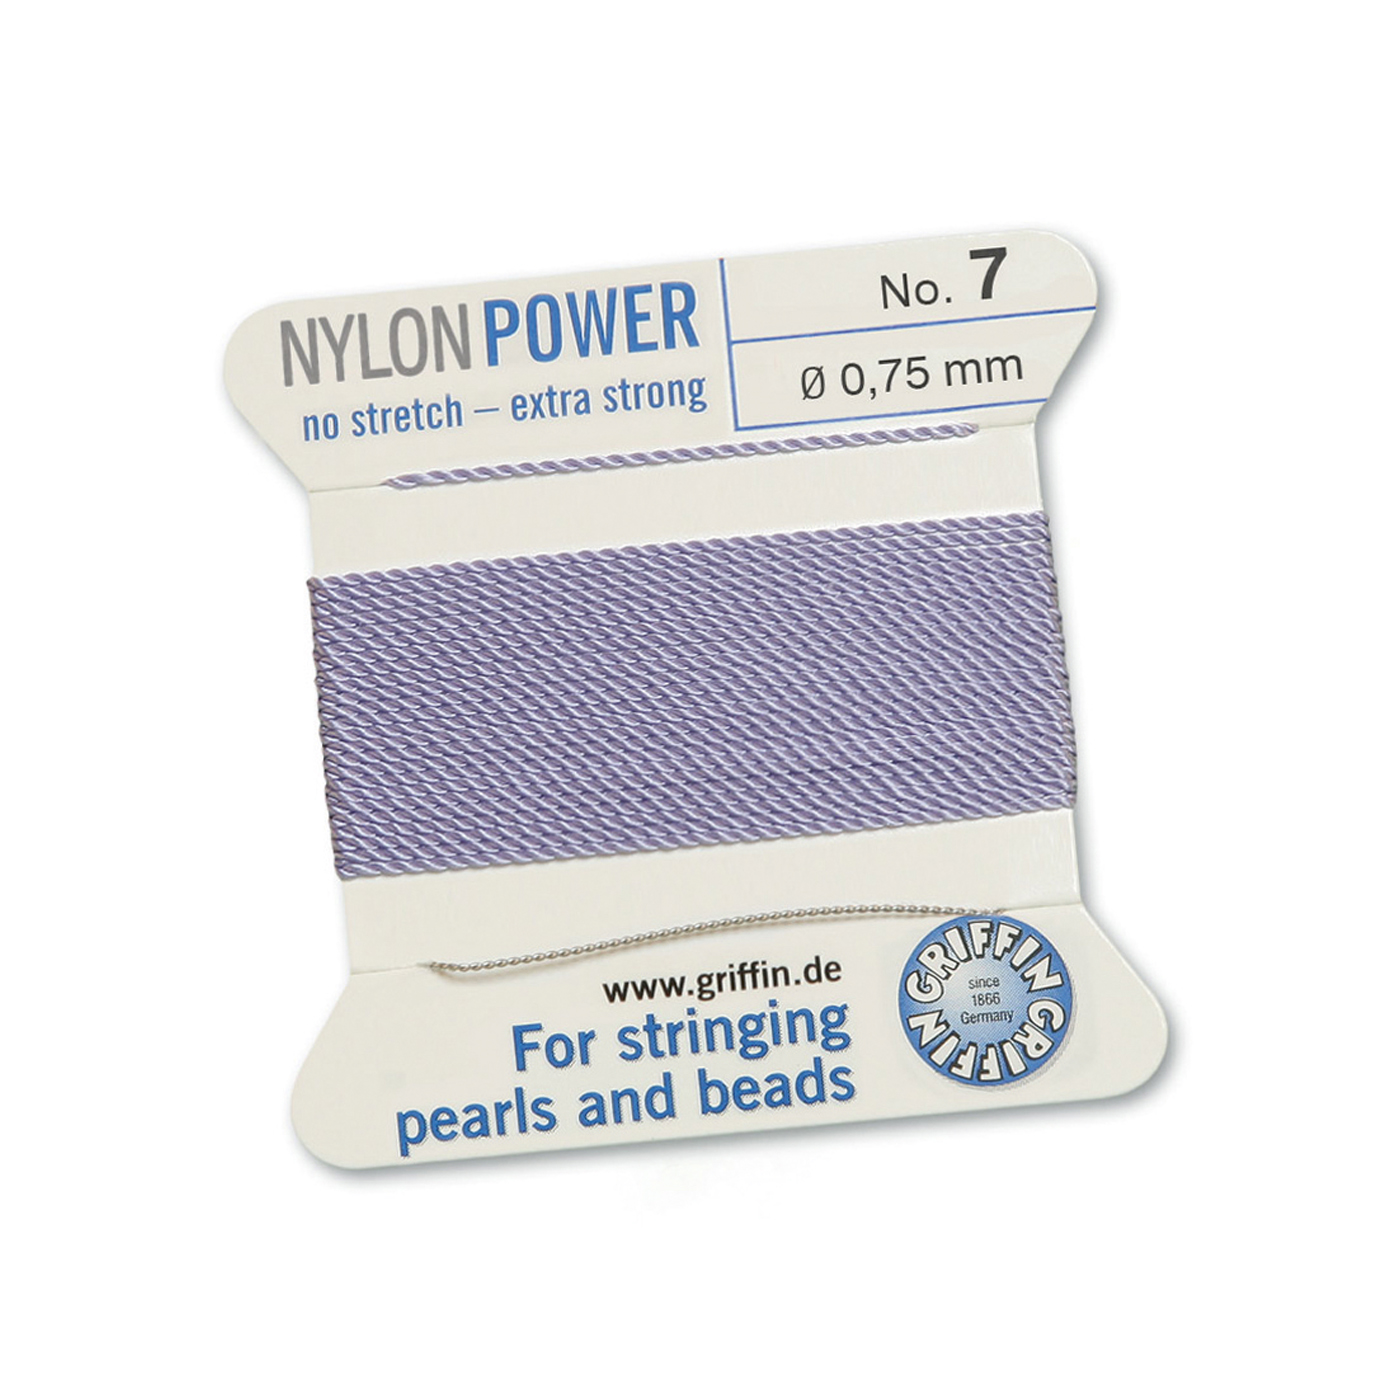 Bead Cord NylonPower, Violet, No. 7 - 2 m